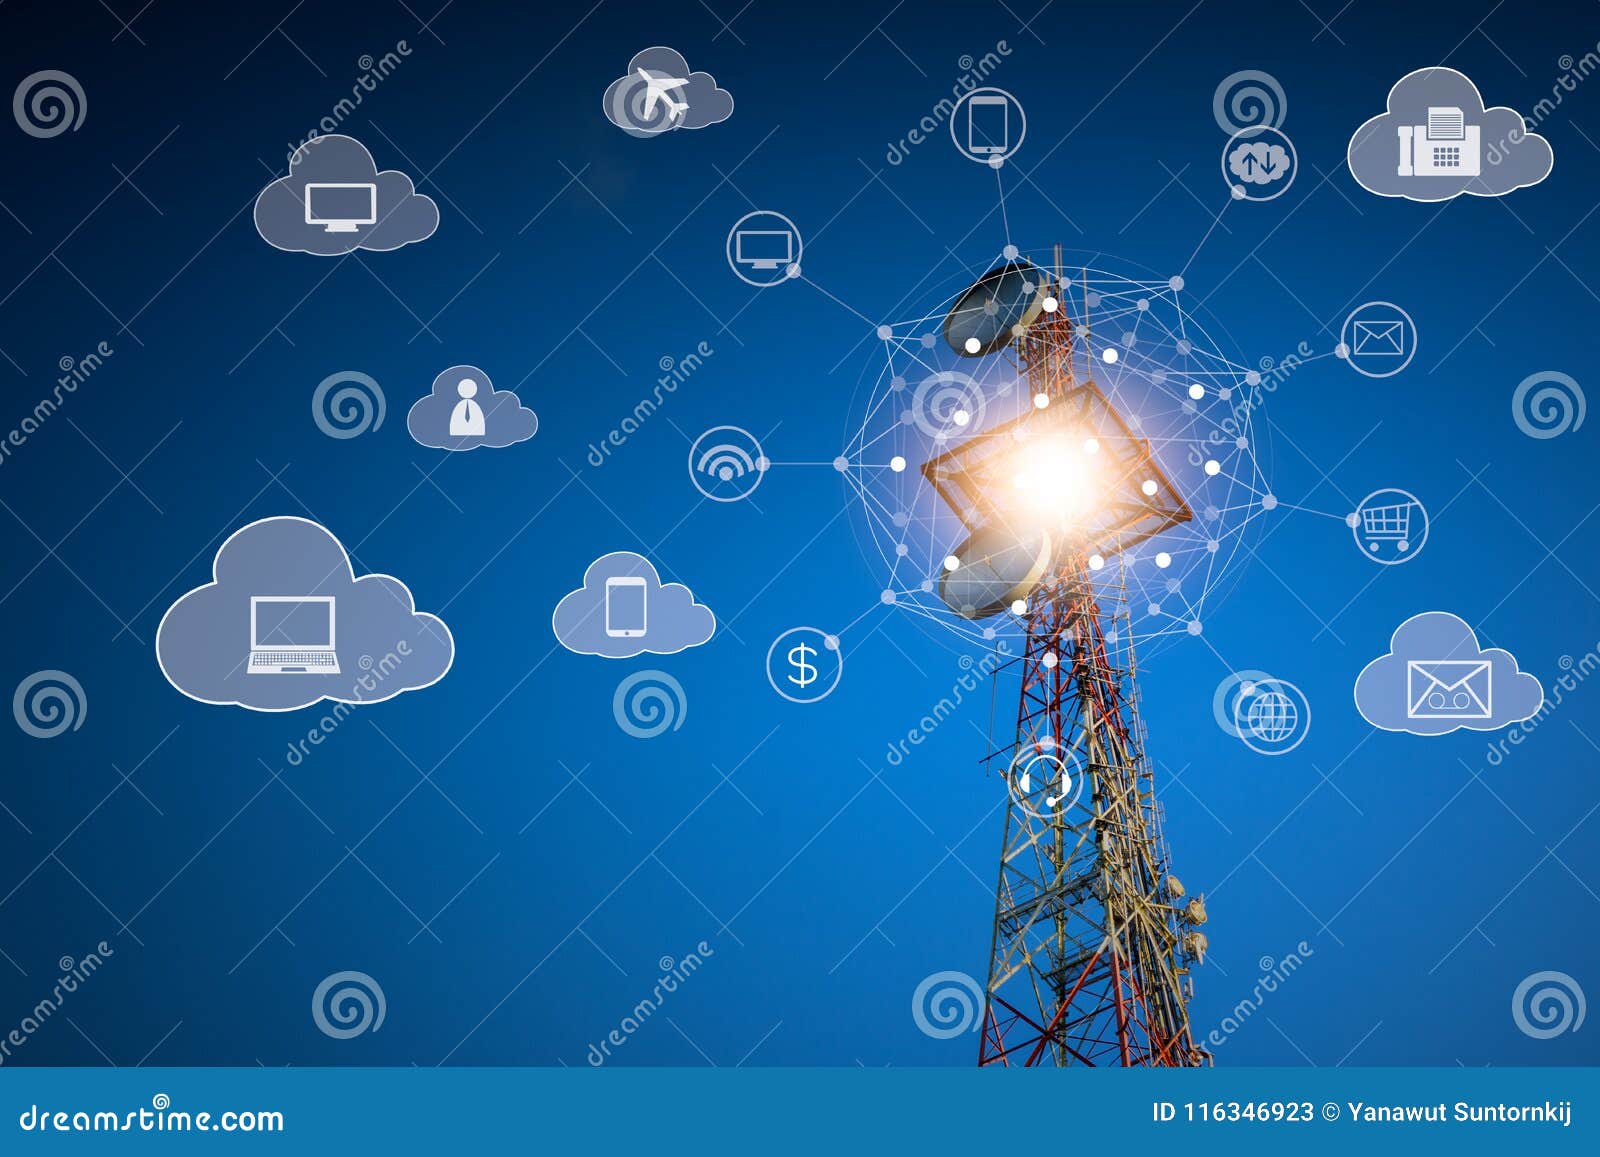 telecommunications on cloud services concept